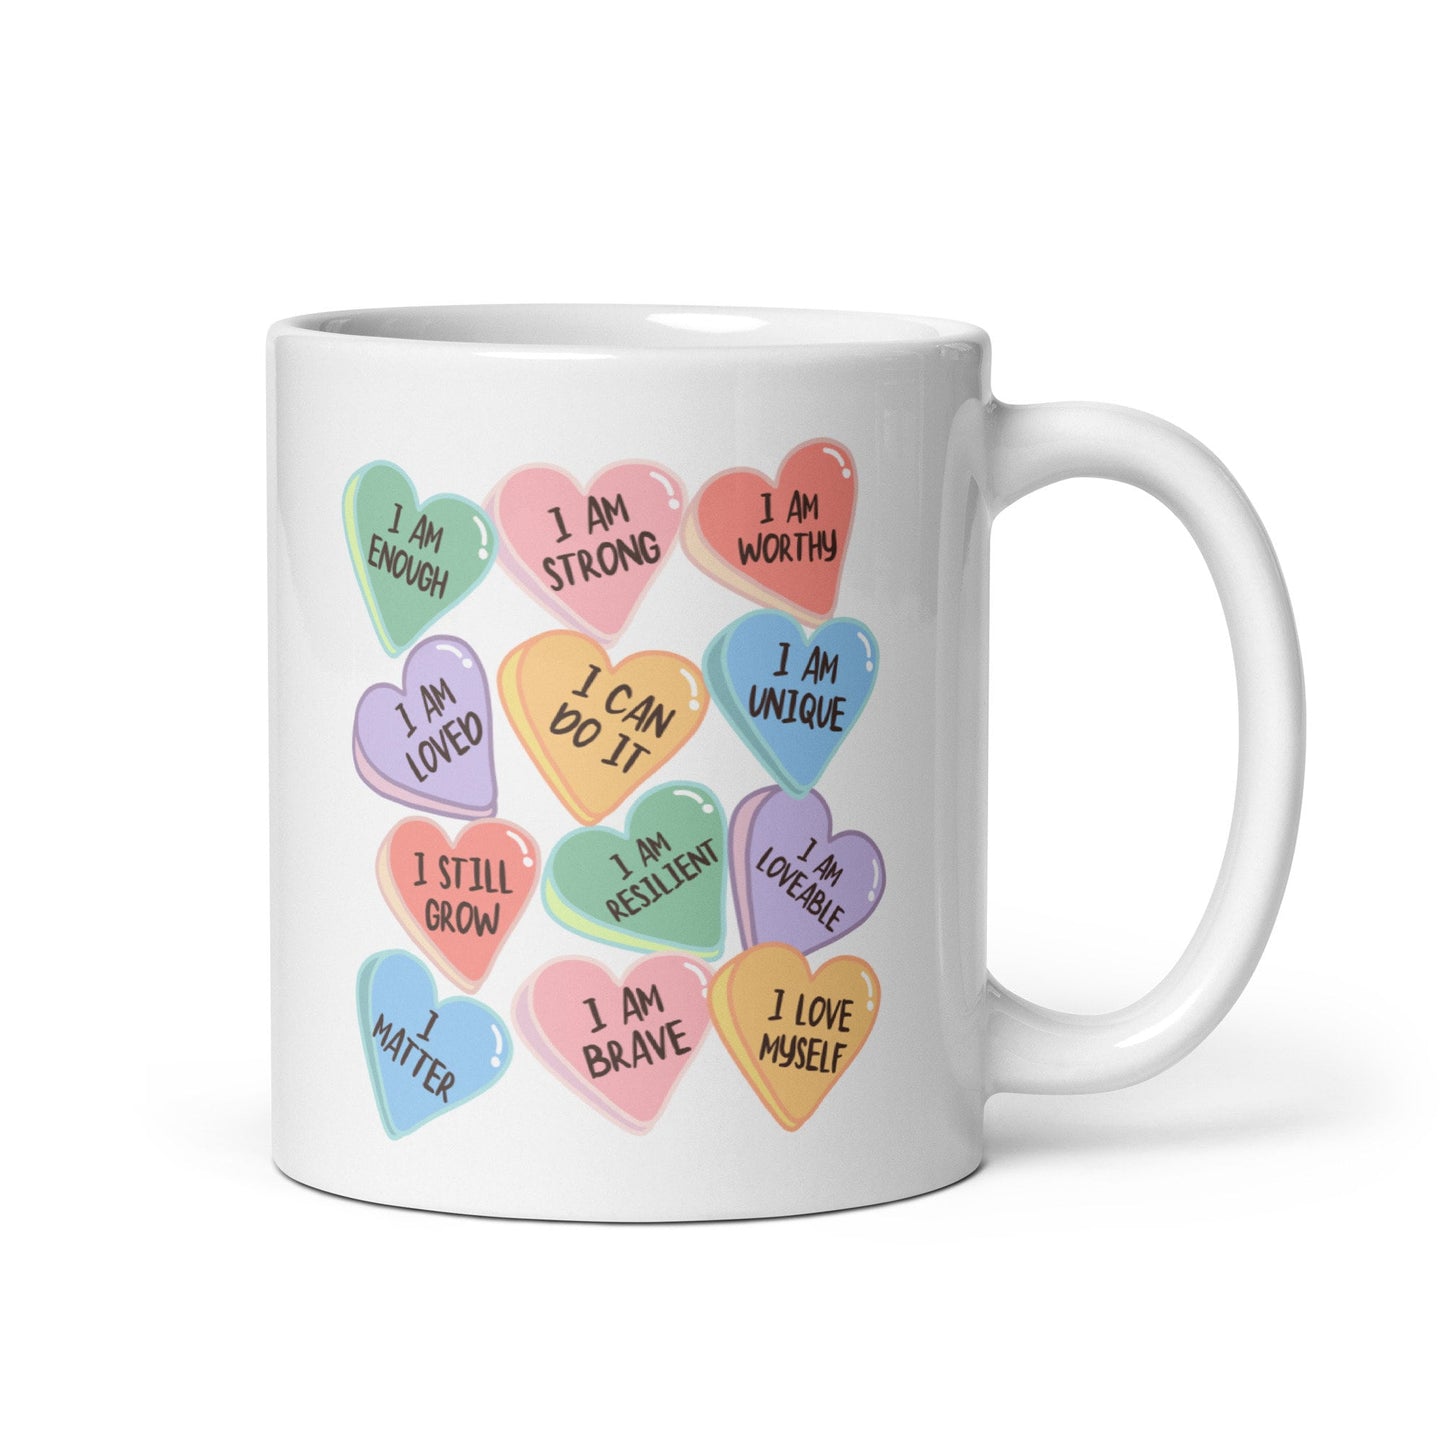 Mug Self Love Candy